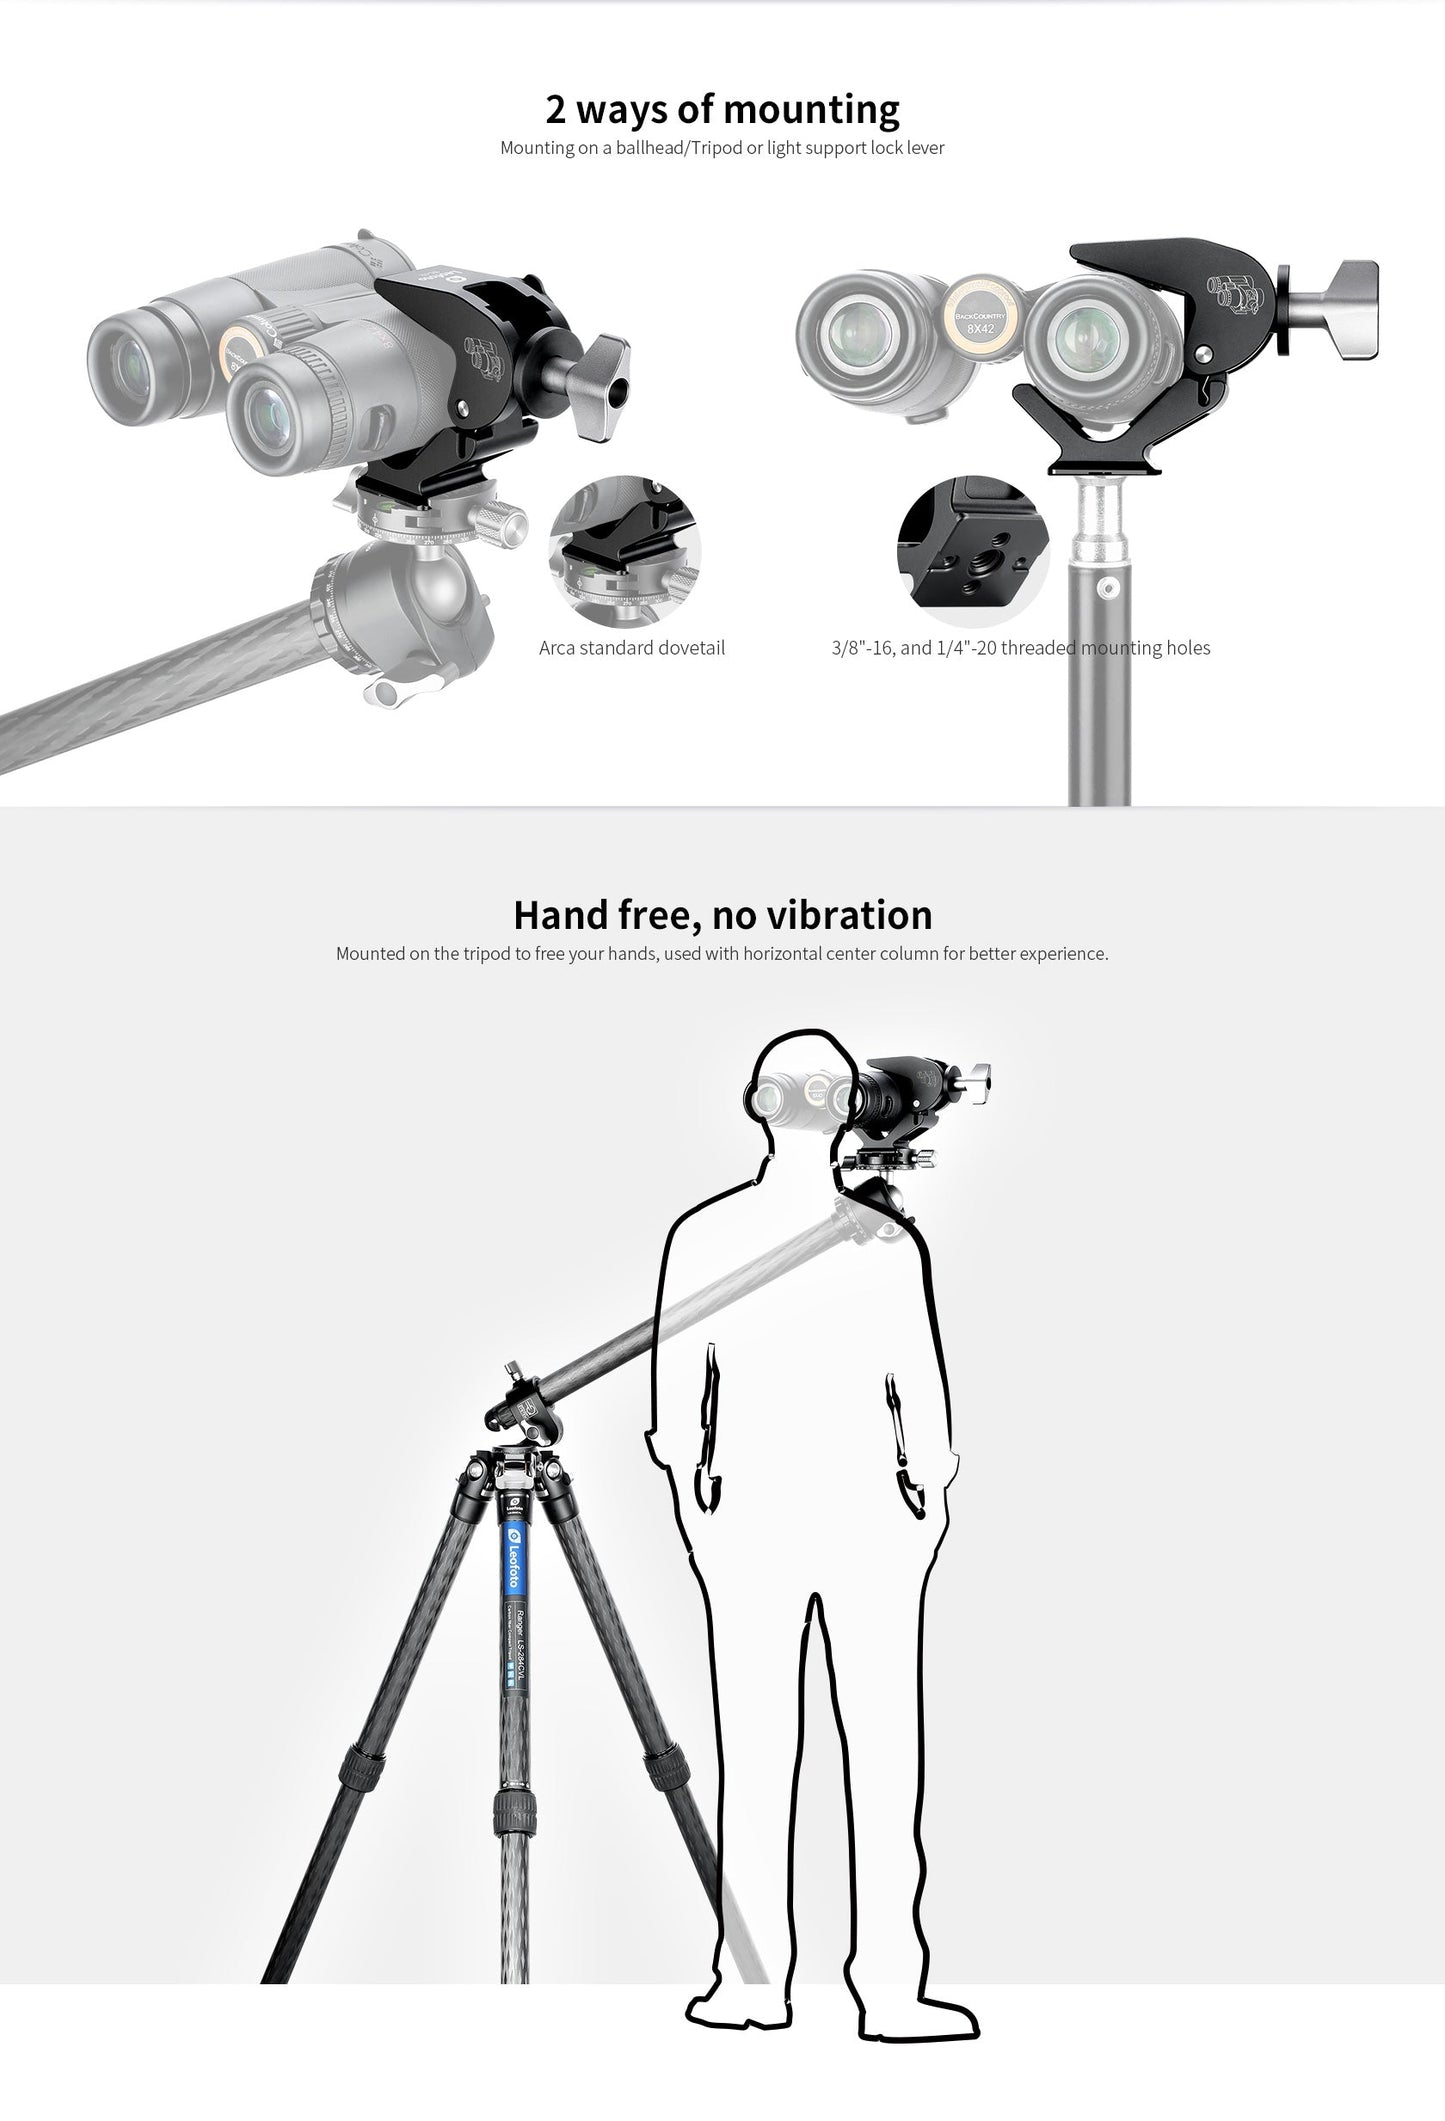 
                  
                    Leofoto BC-02 Binoculars Adapter /ARCA Style Dovetail Standard For Diameter 28-60mm
                  
                